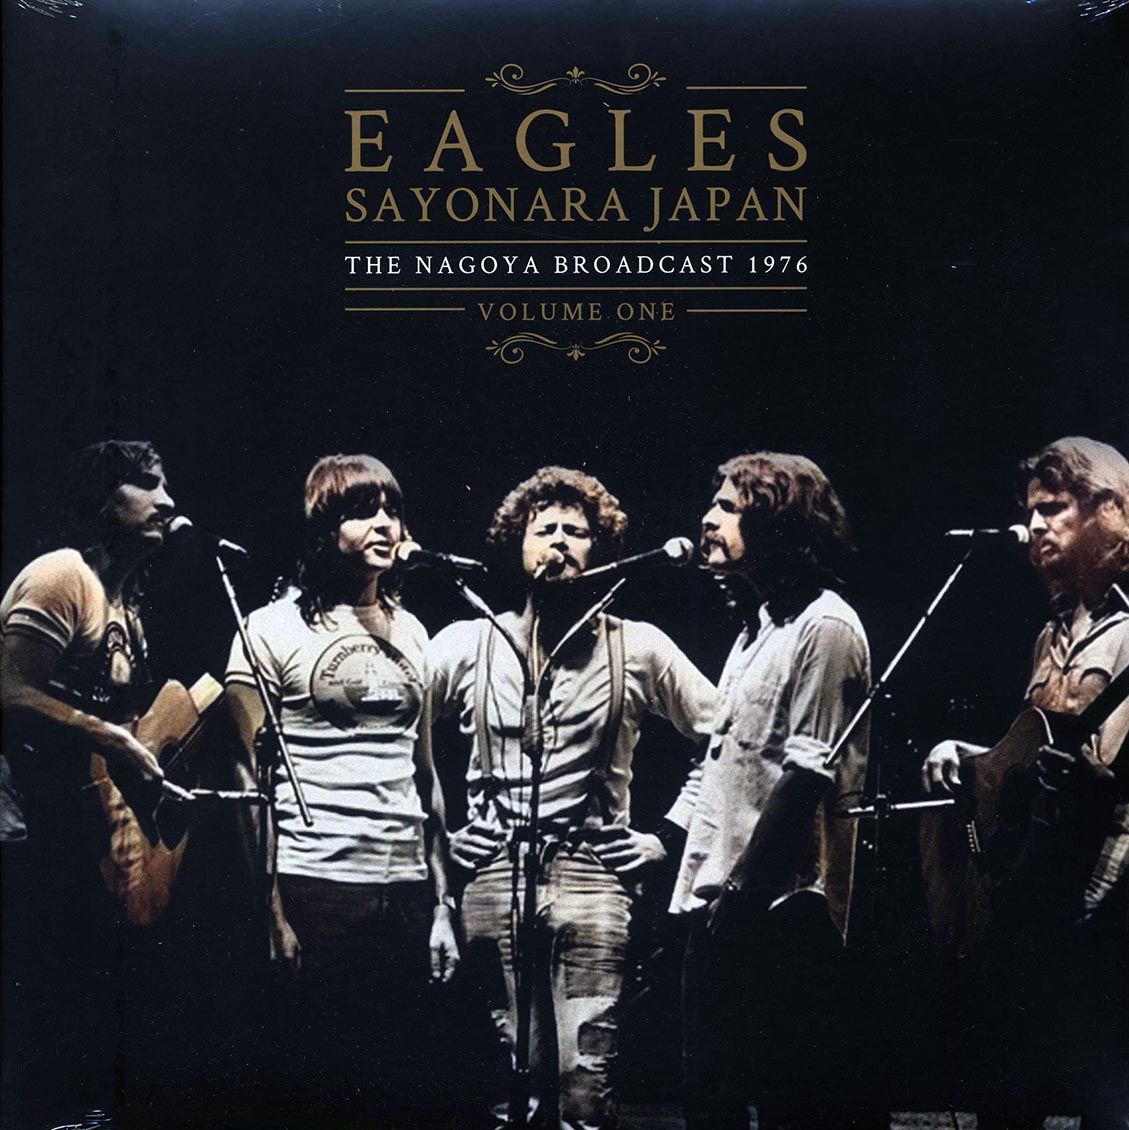 Eagles - Sayonara Japan Volume 1: The Nagoya Broadcast 1976 (2xLP) - Vinyl LP